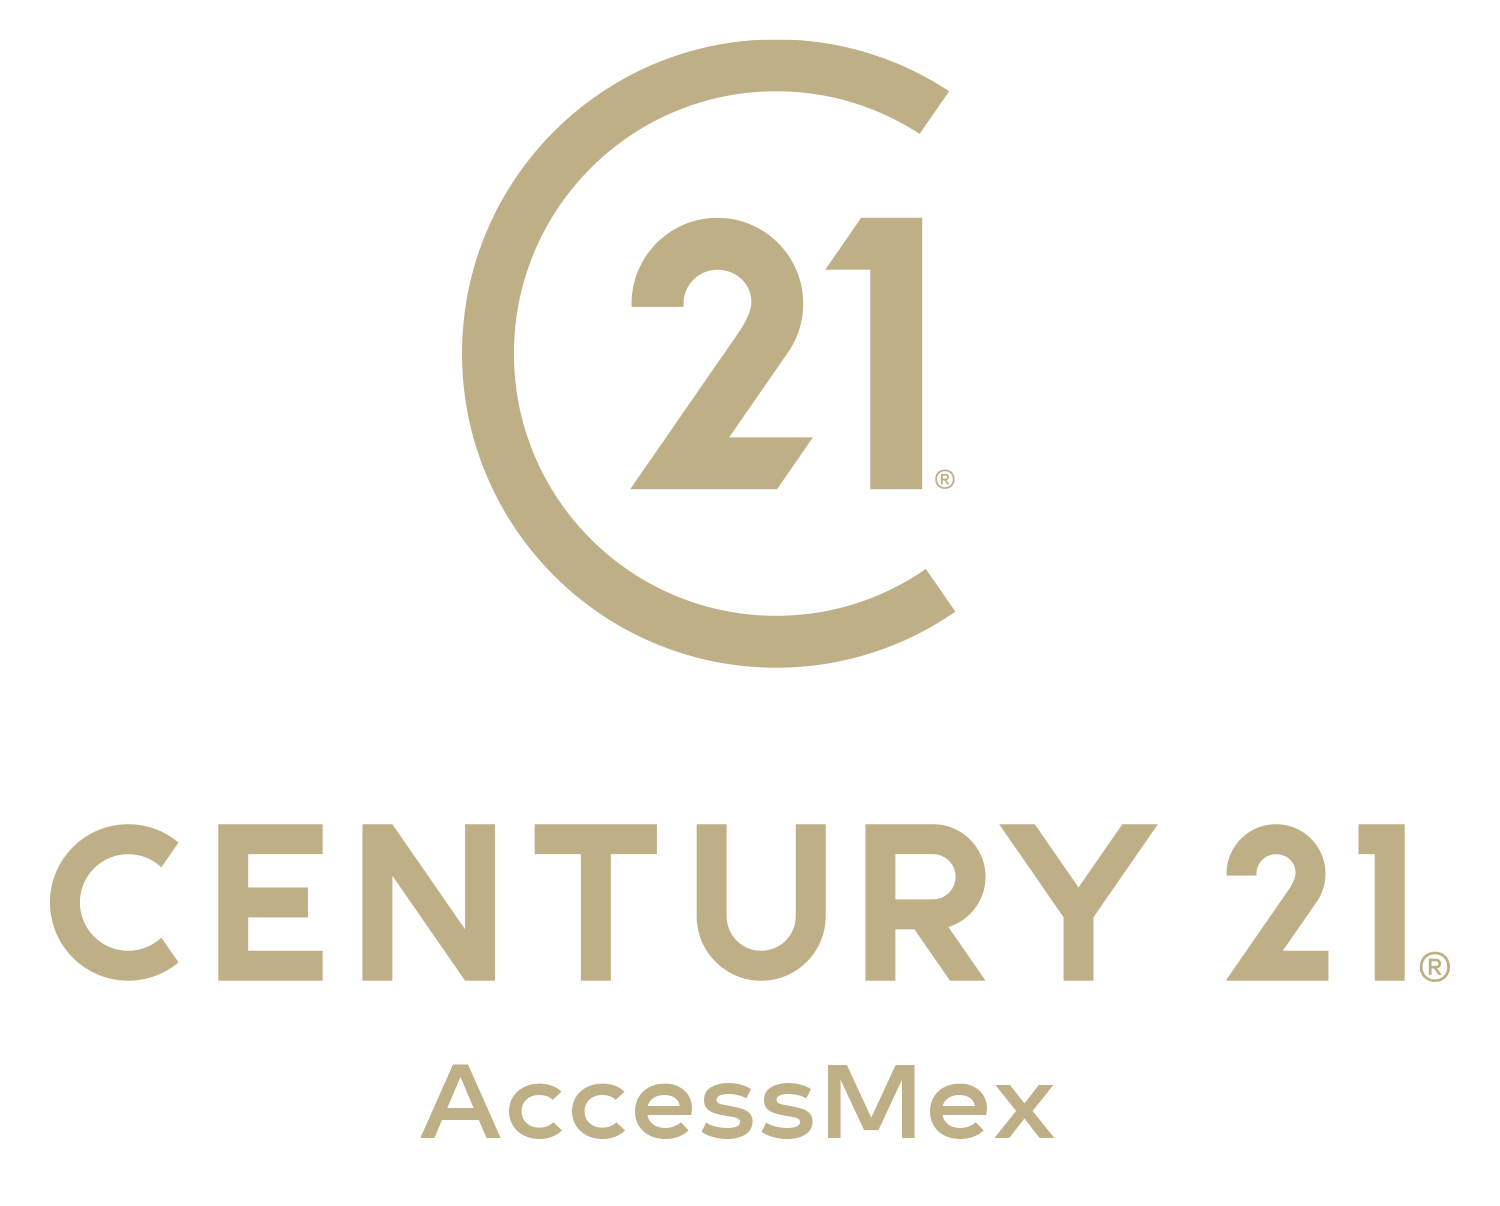 21 century недвижимость. Сенчури 21 логотип. Центури 21. Century логотип. Сенчури 21 агентство недвижимости.